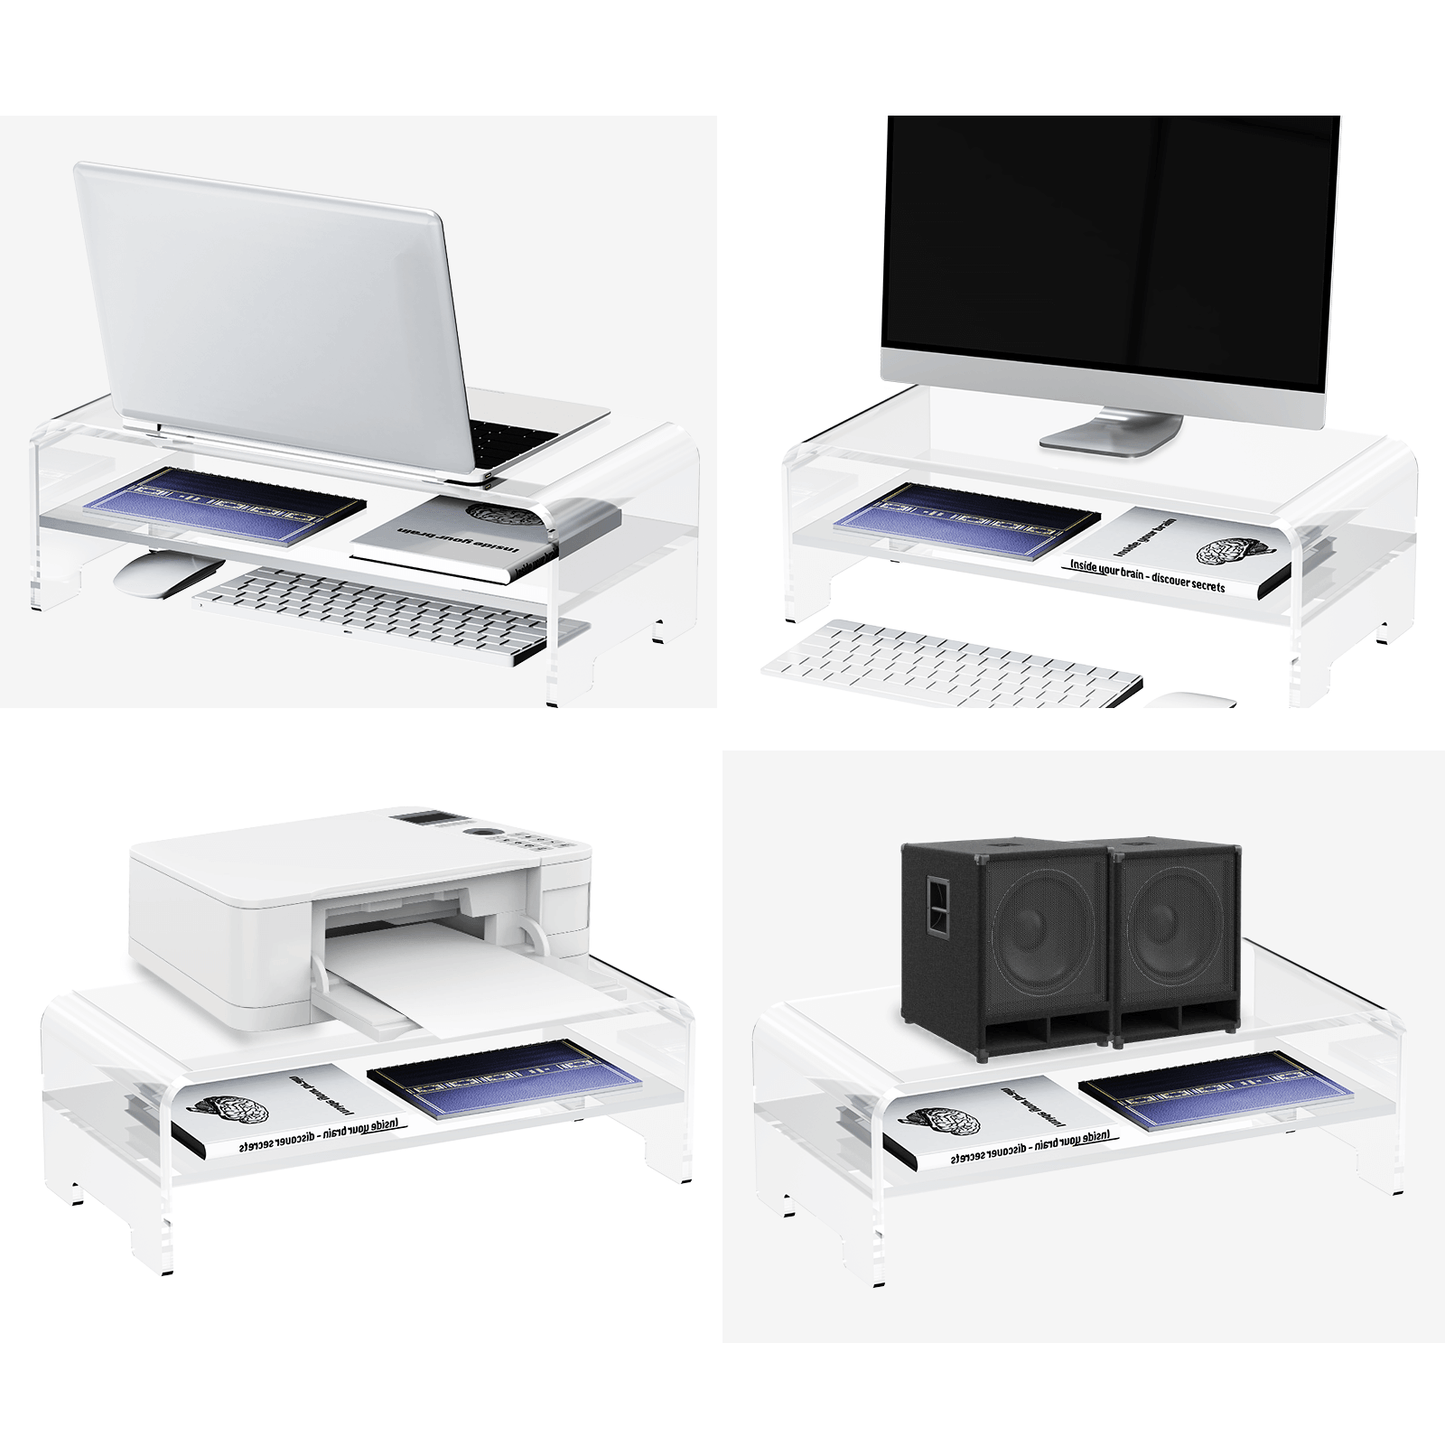 WOKA acrylic computer monitor riser for computer, monitor or printer